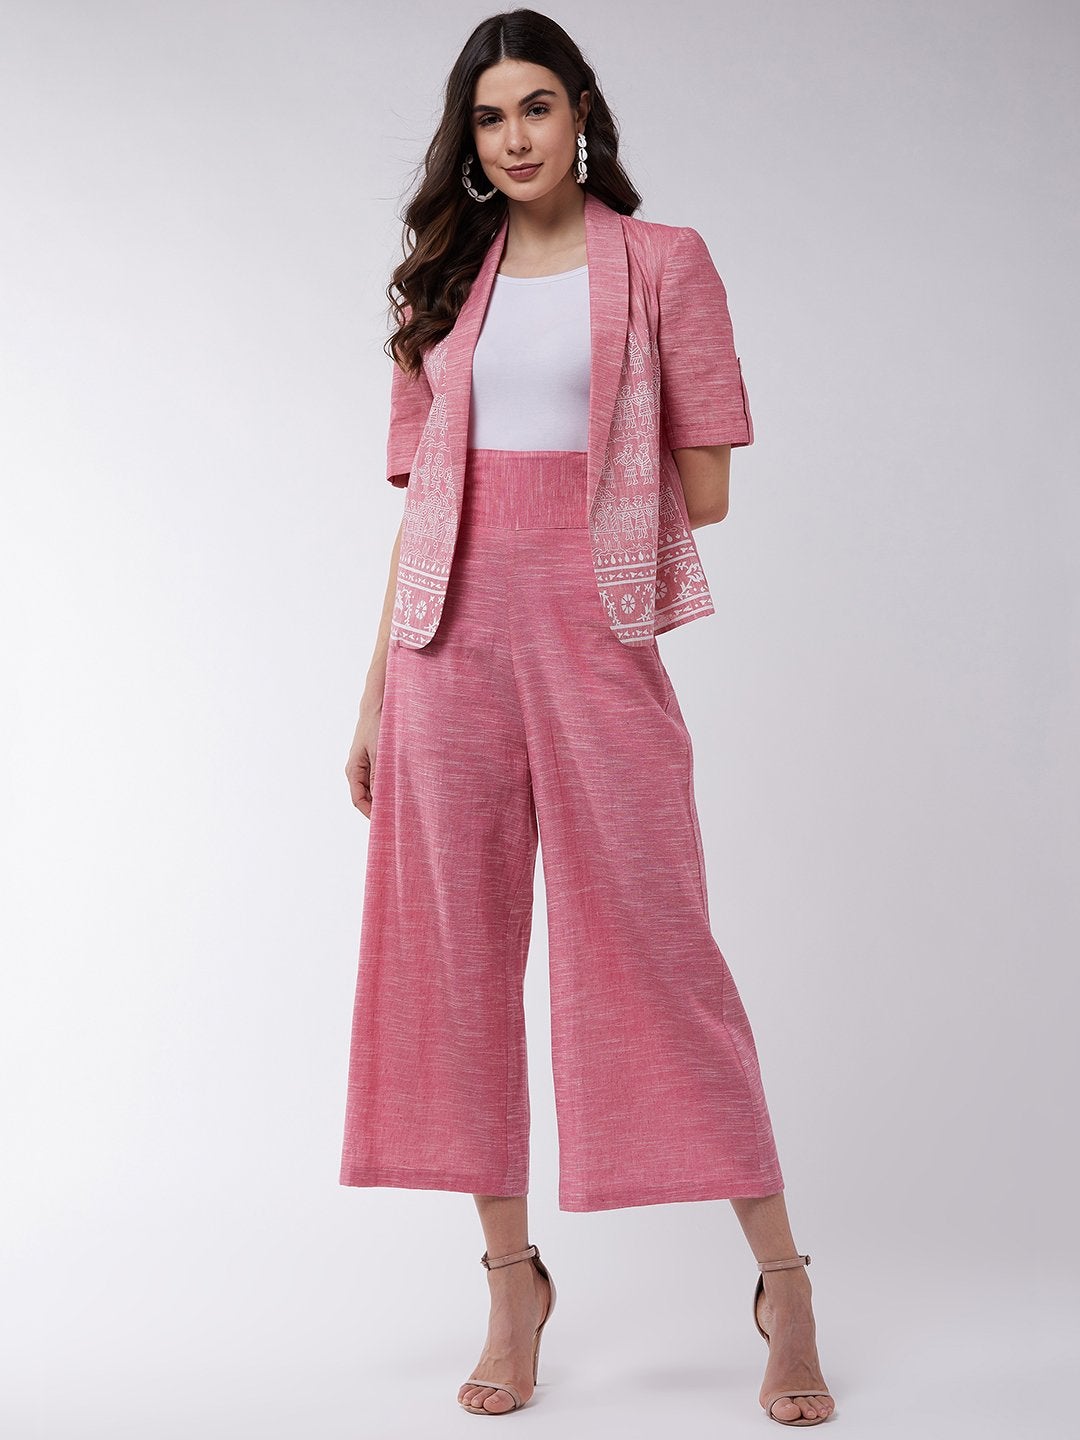 Women's Chambray Printed Blazer With High Waist Pant Set - Pannkh